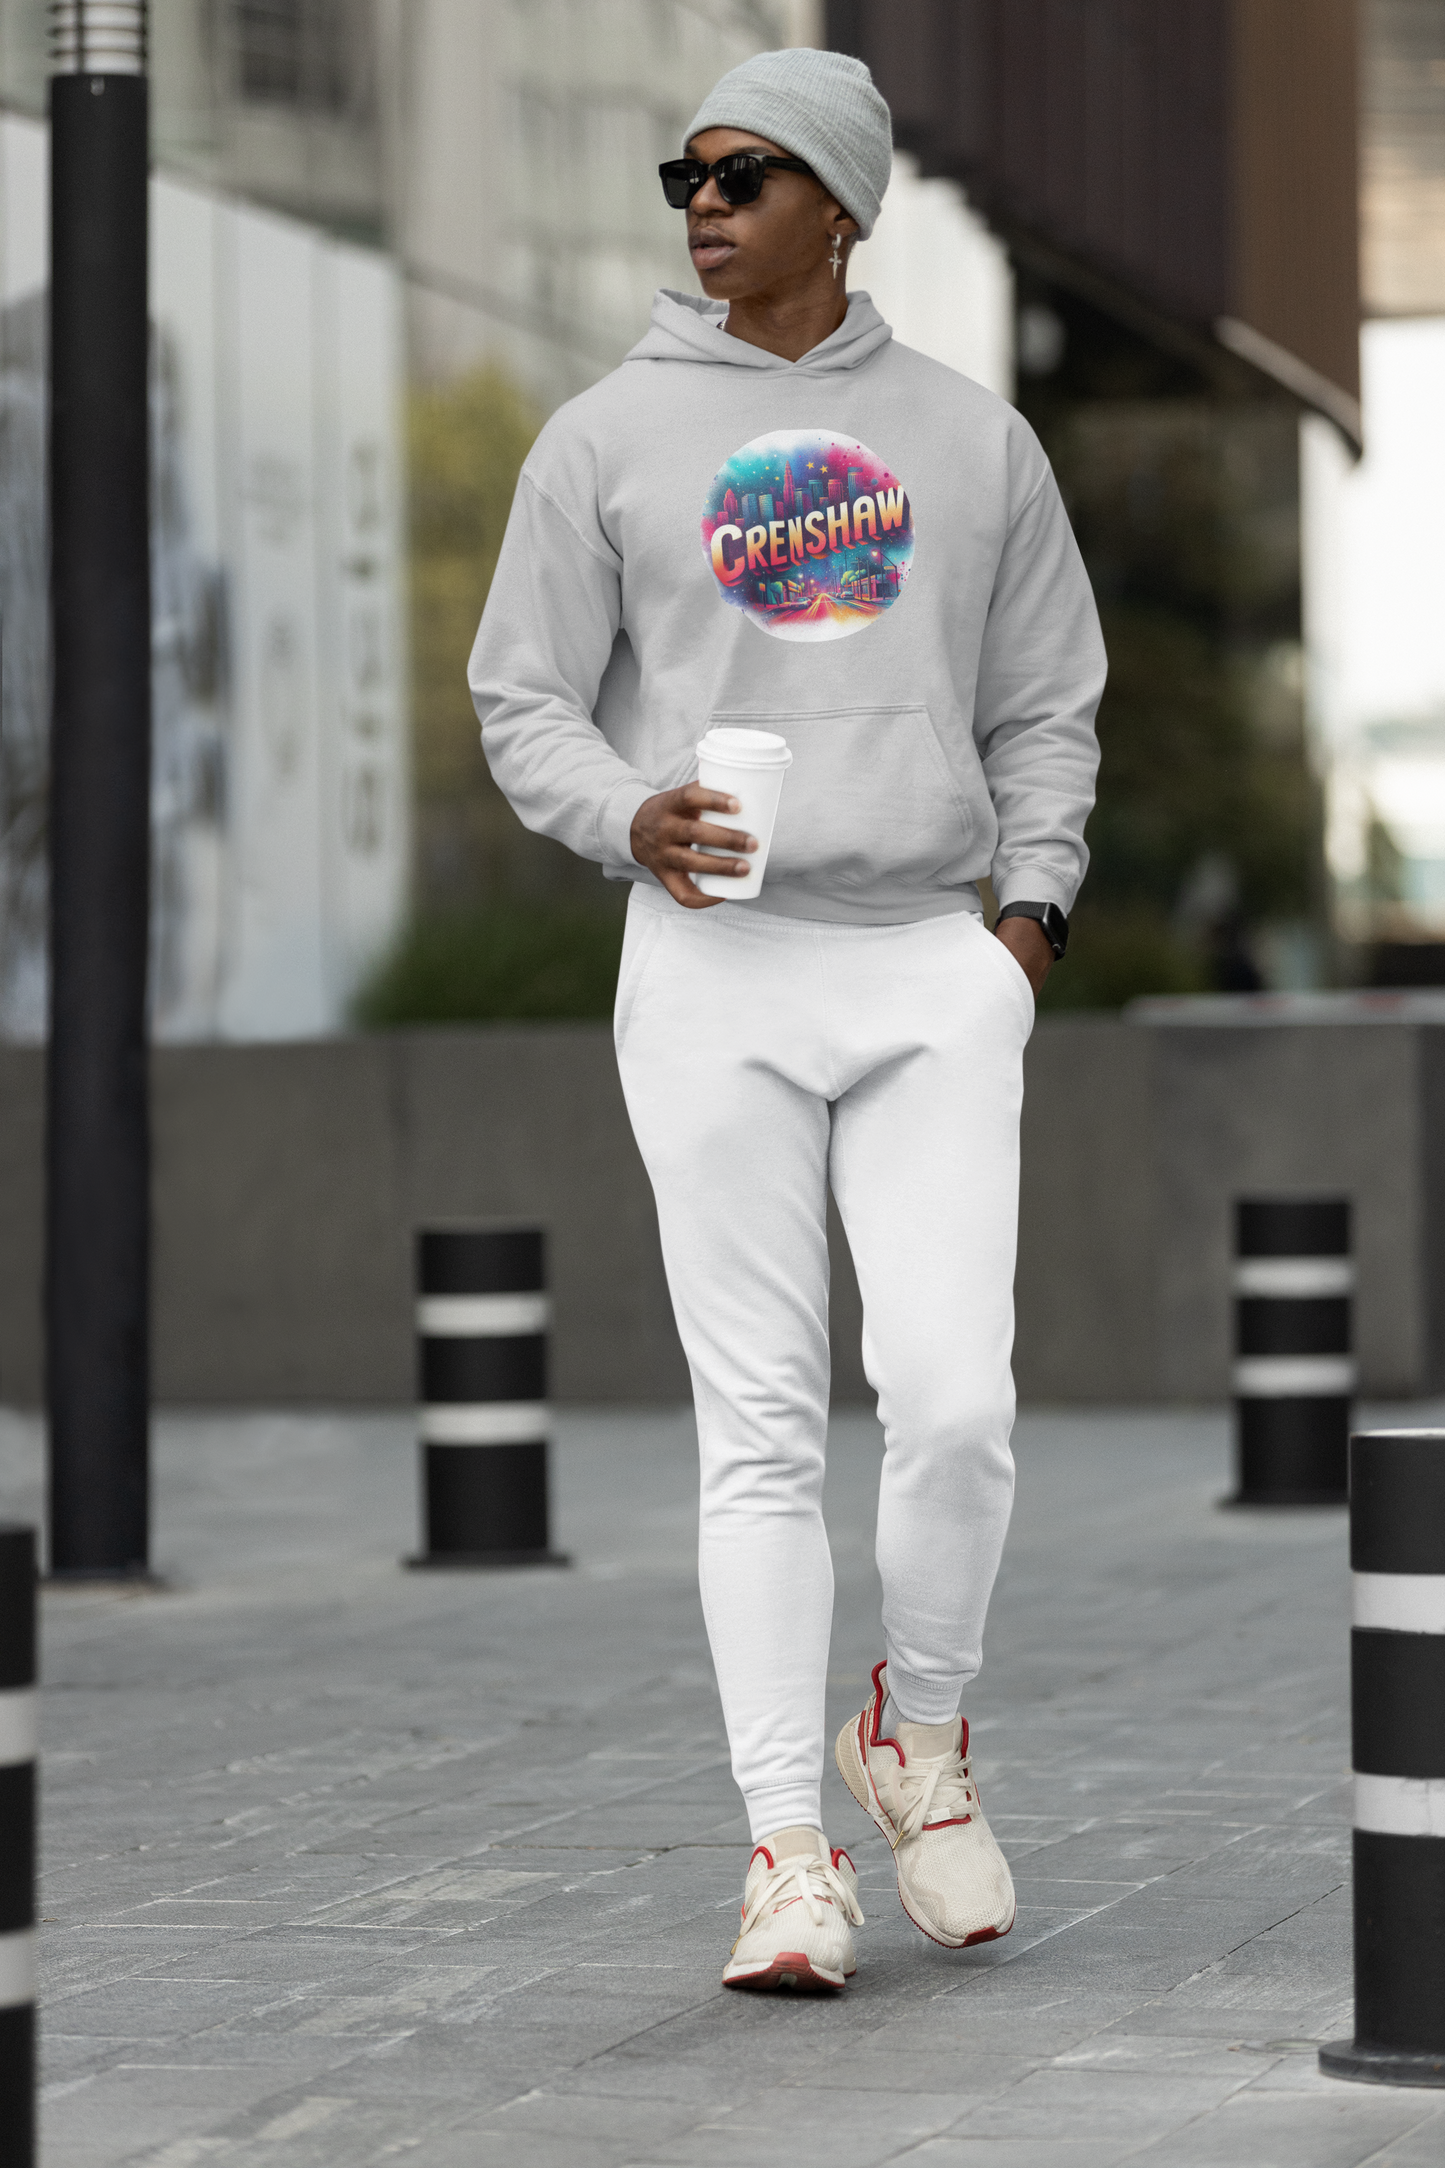 CRENSHAW TWO PORTRAIT STYLE Hooded Sweatshirt, Back in the Day, African American Culture, Black History, Iconic Black Neighborhood, Graphic Sweatshirt, Urban Streetwear